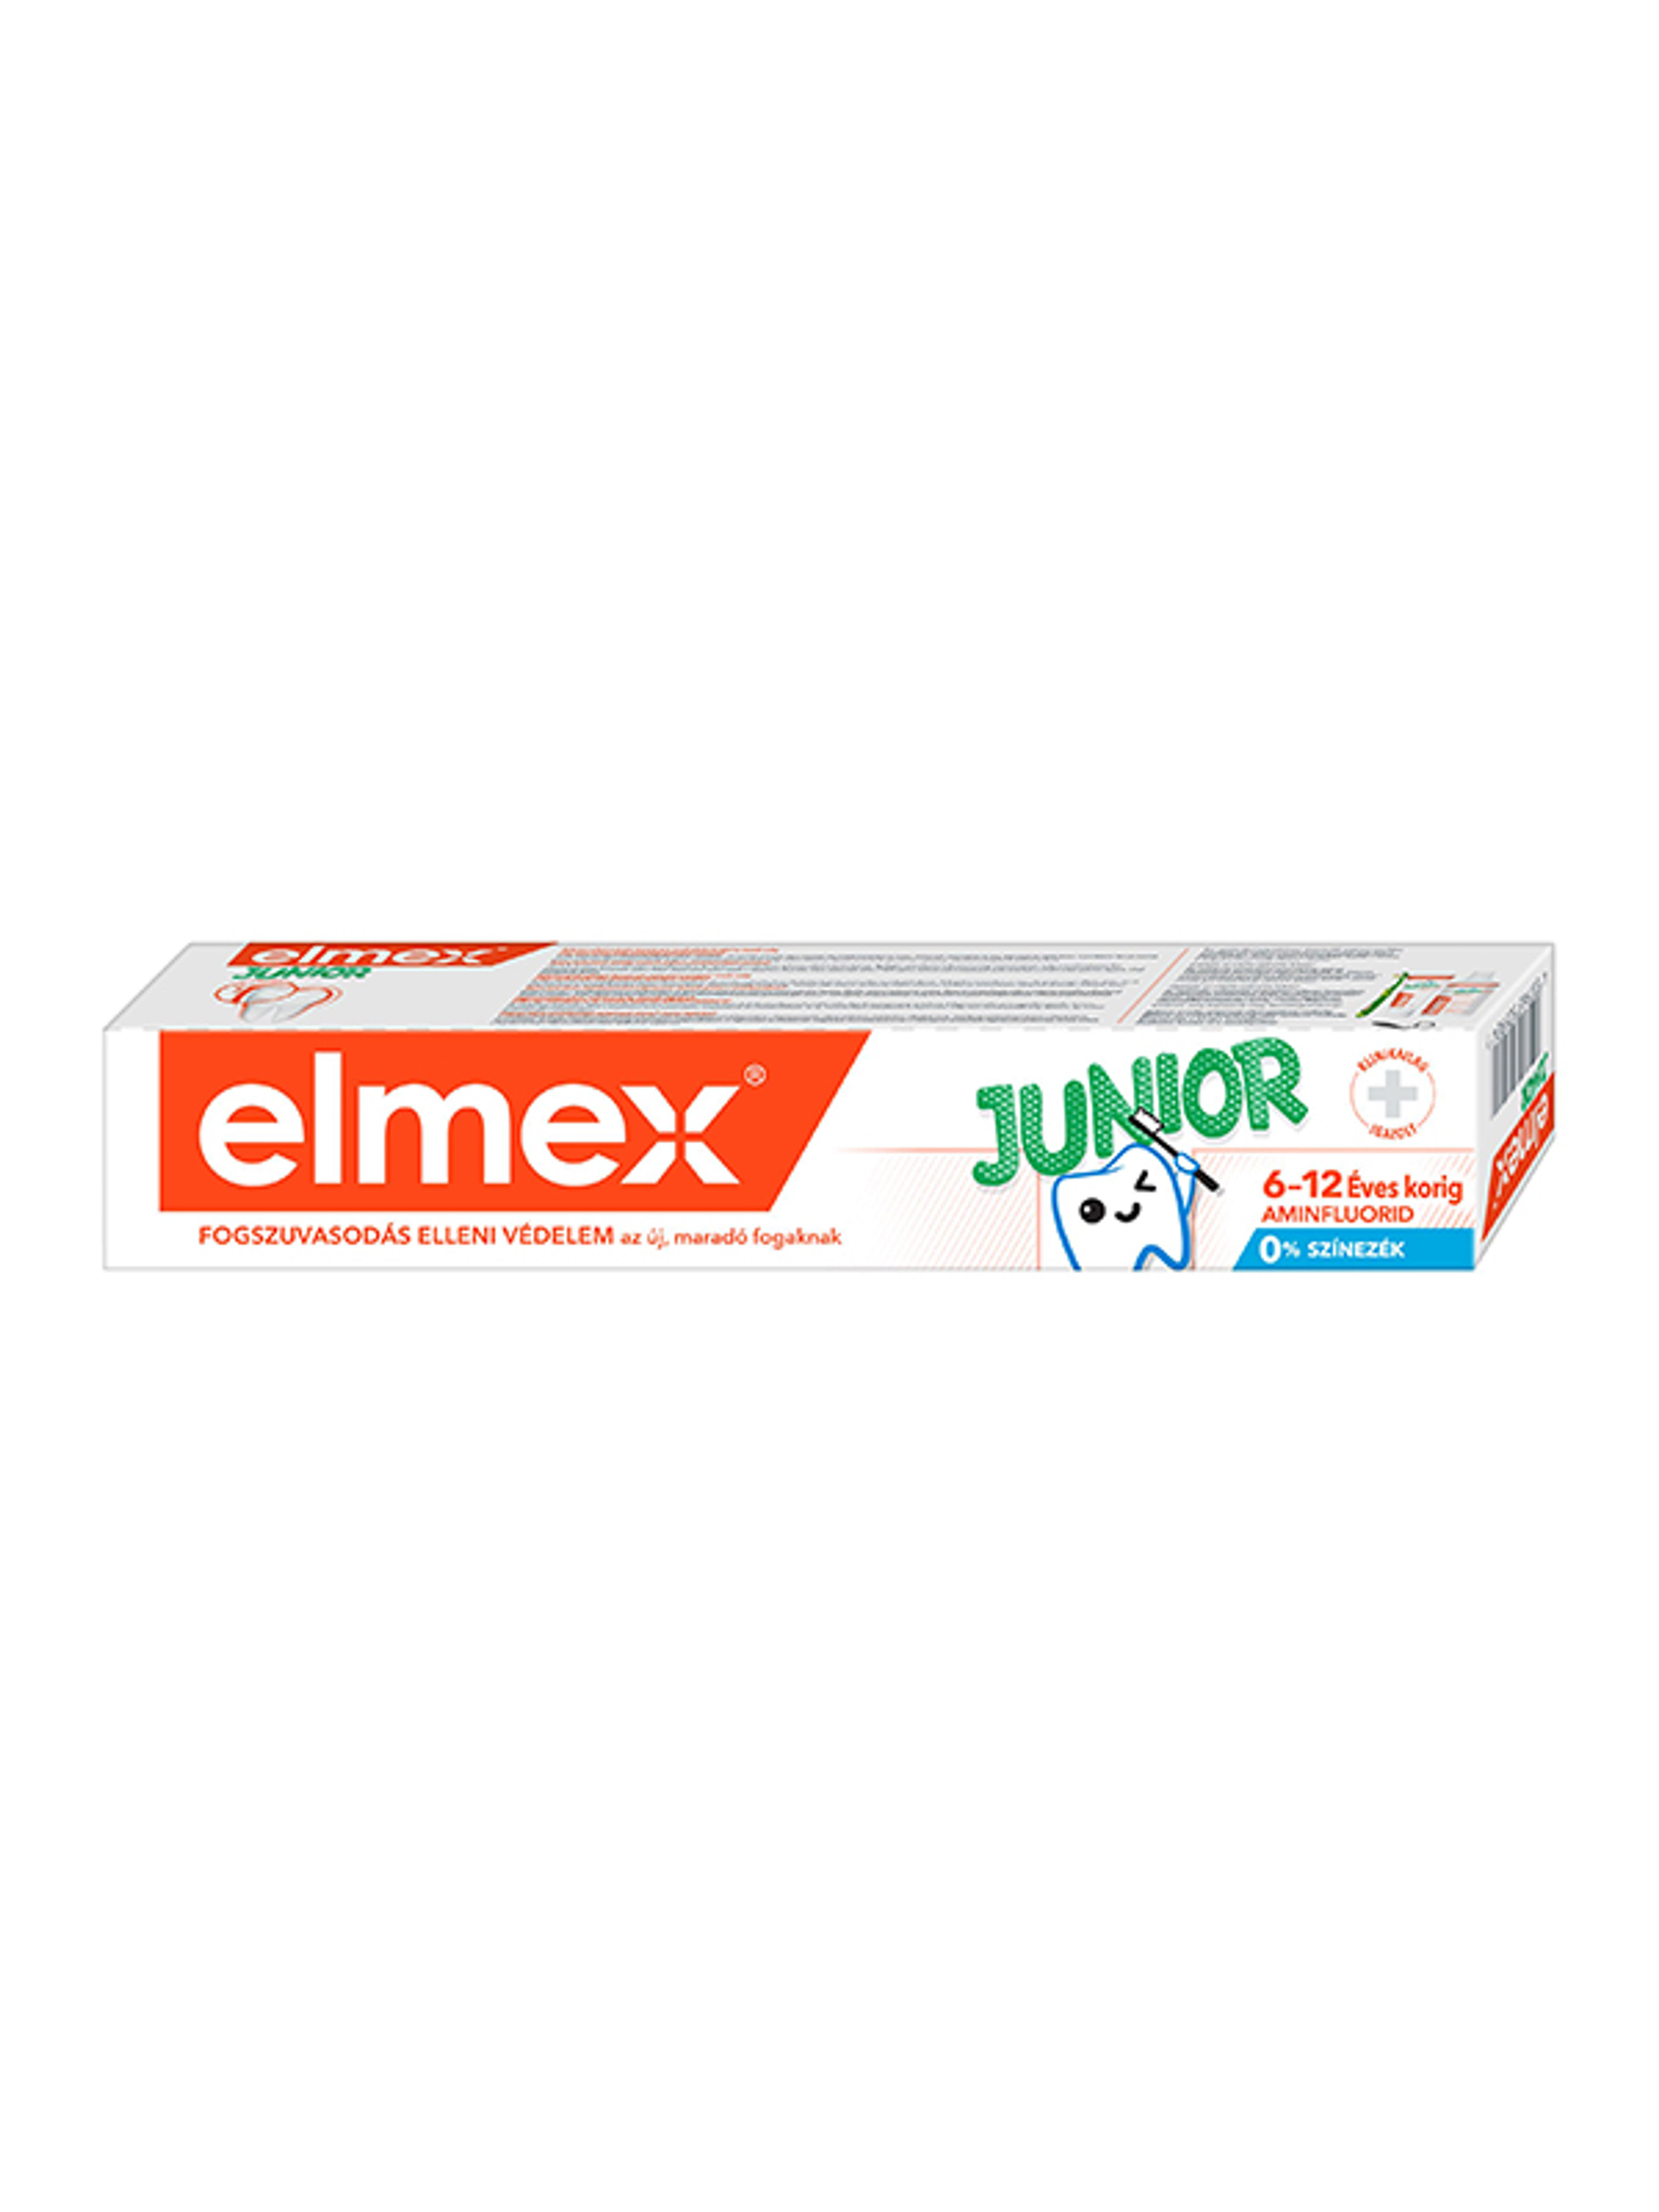 Elmex Junior fluoridos fogkrém 6-12 éves korig - 75 ml-7